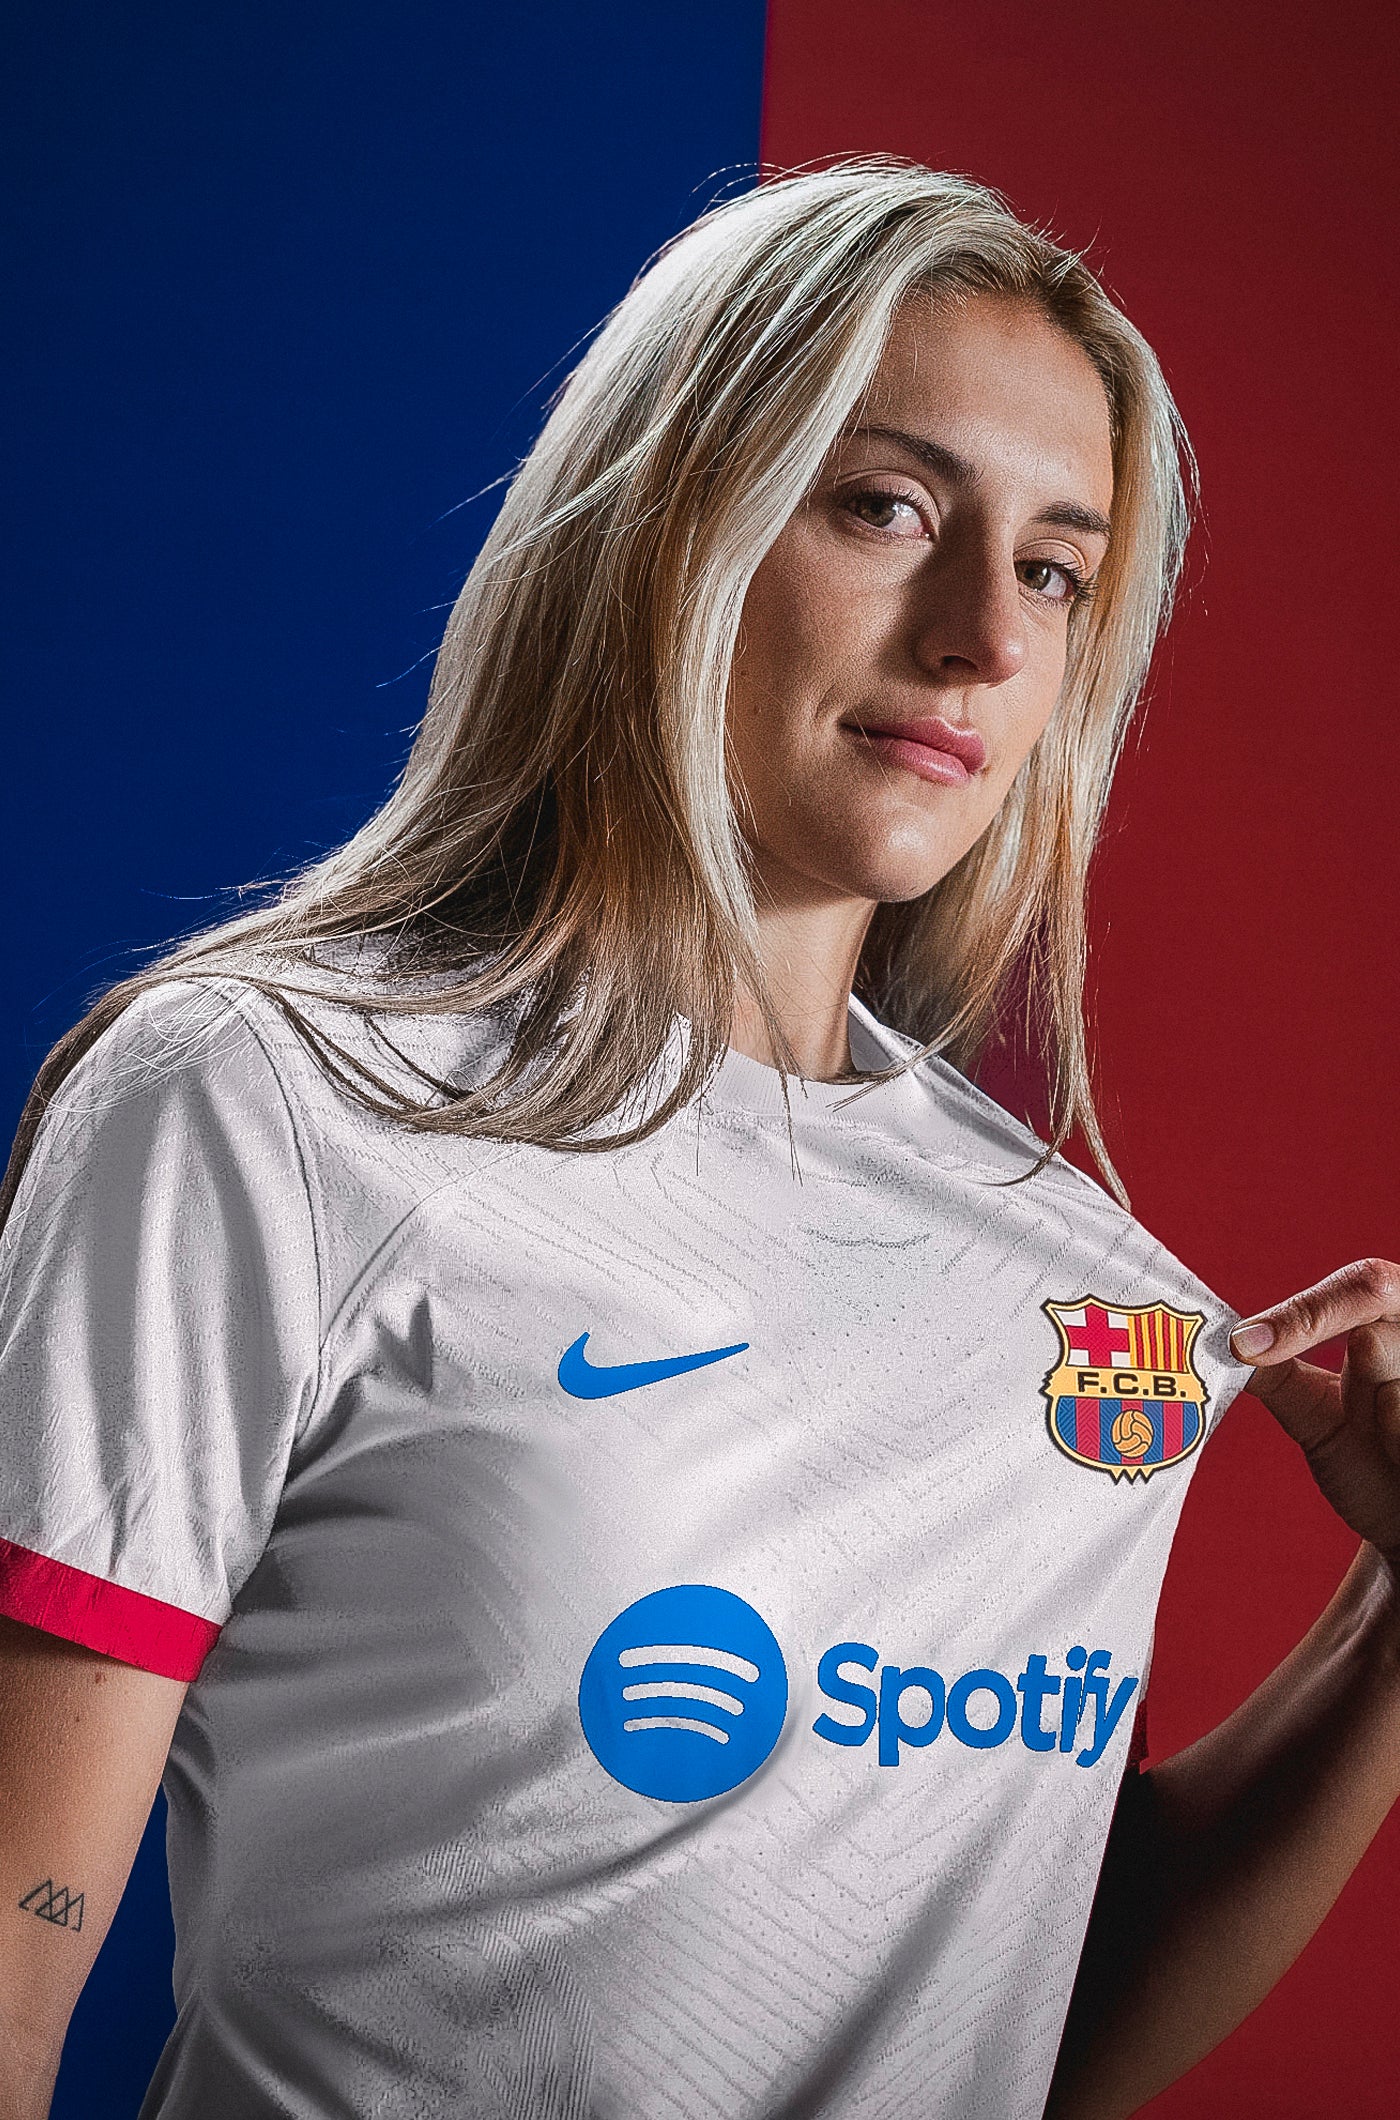 UWCL FC Barcelona Away Shirt 23/24 Player’s Edition - Women  - ALEXIA